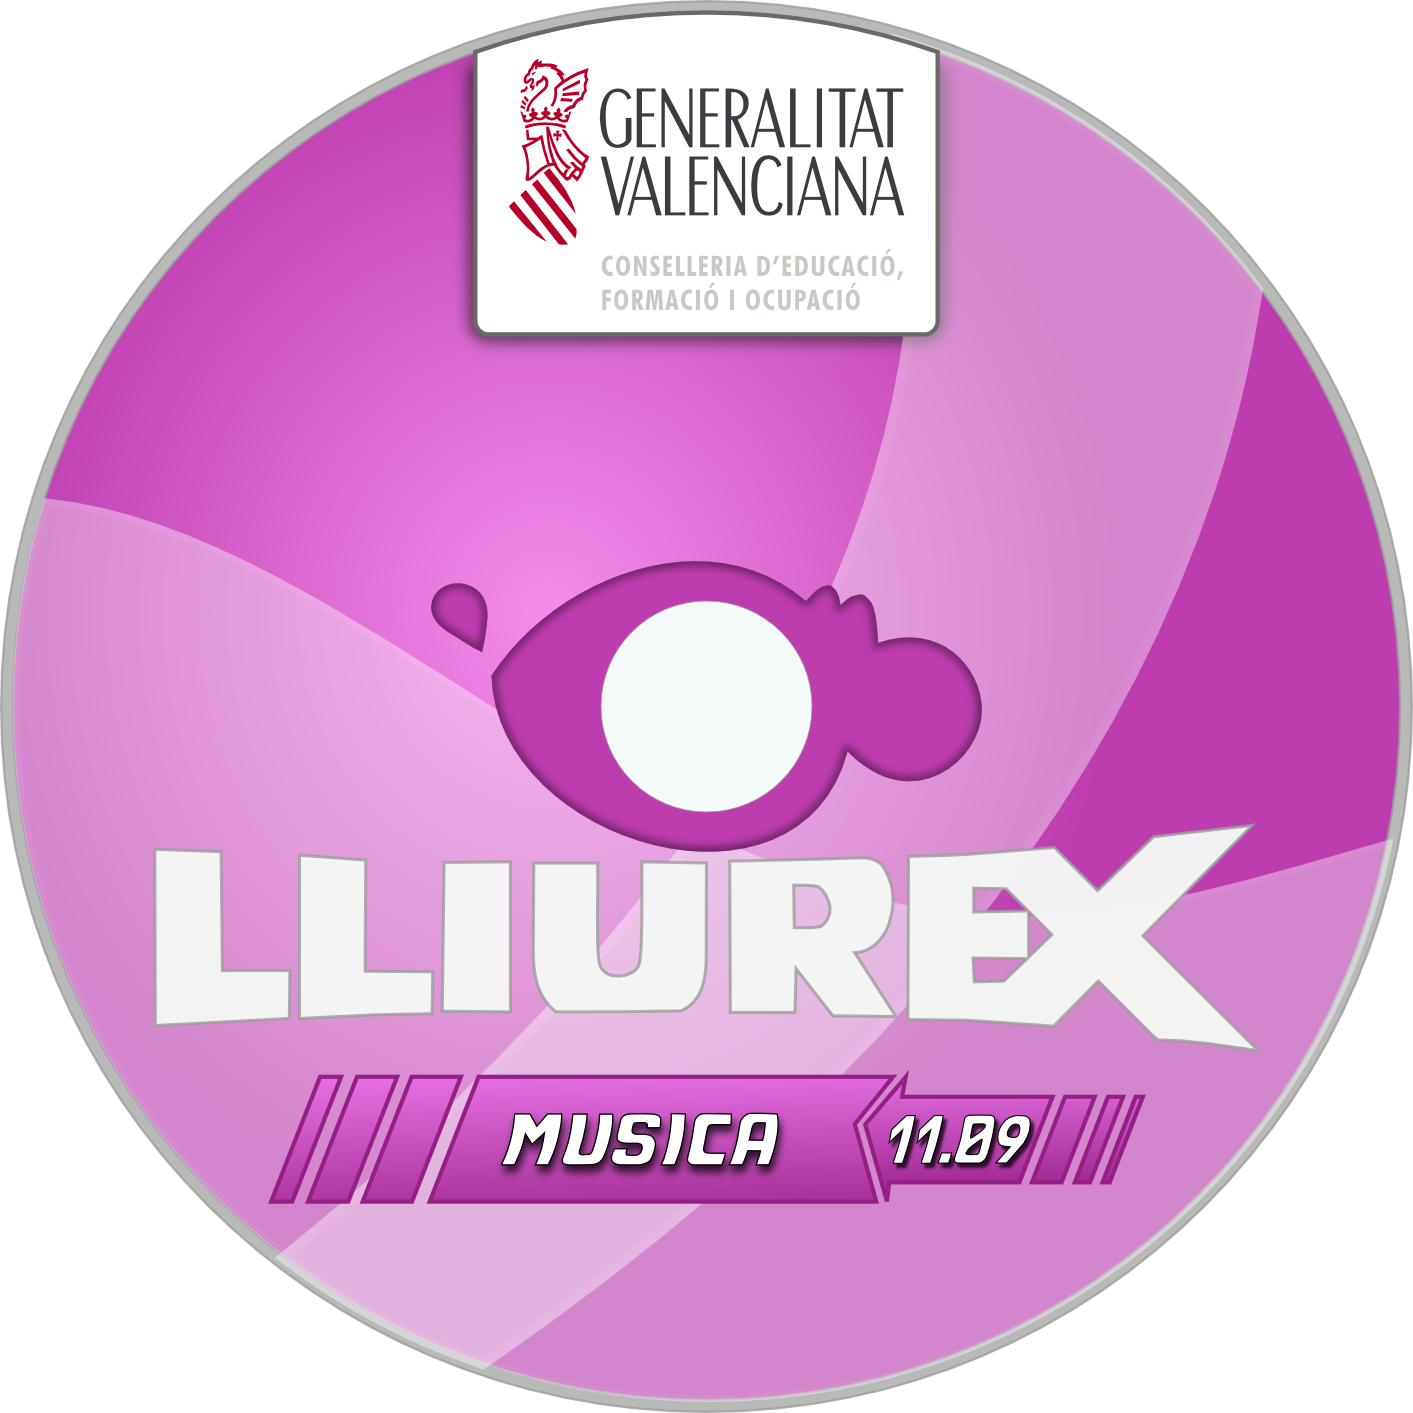 Lliurex Musica Software11.09 PNG image